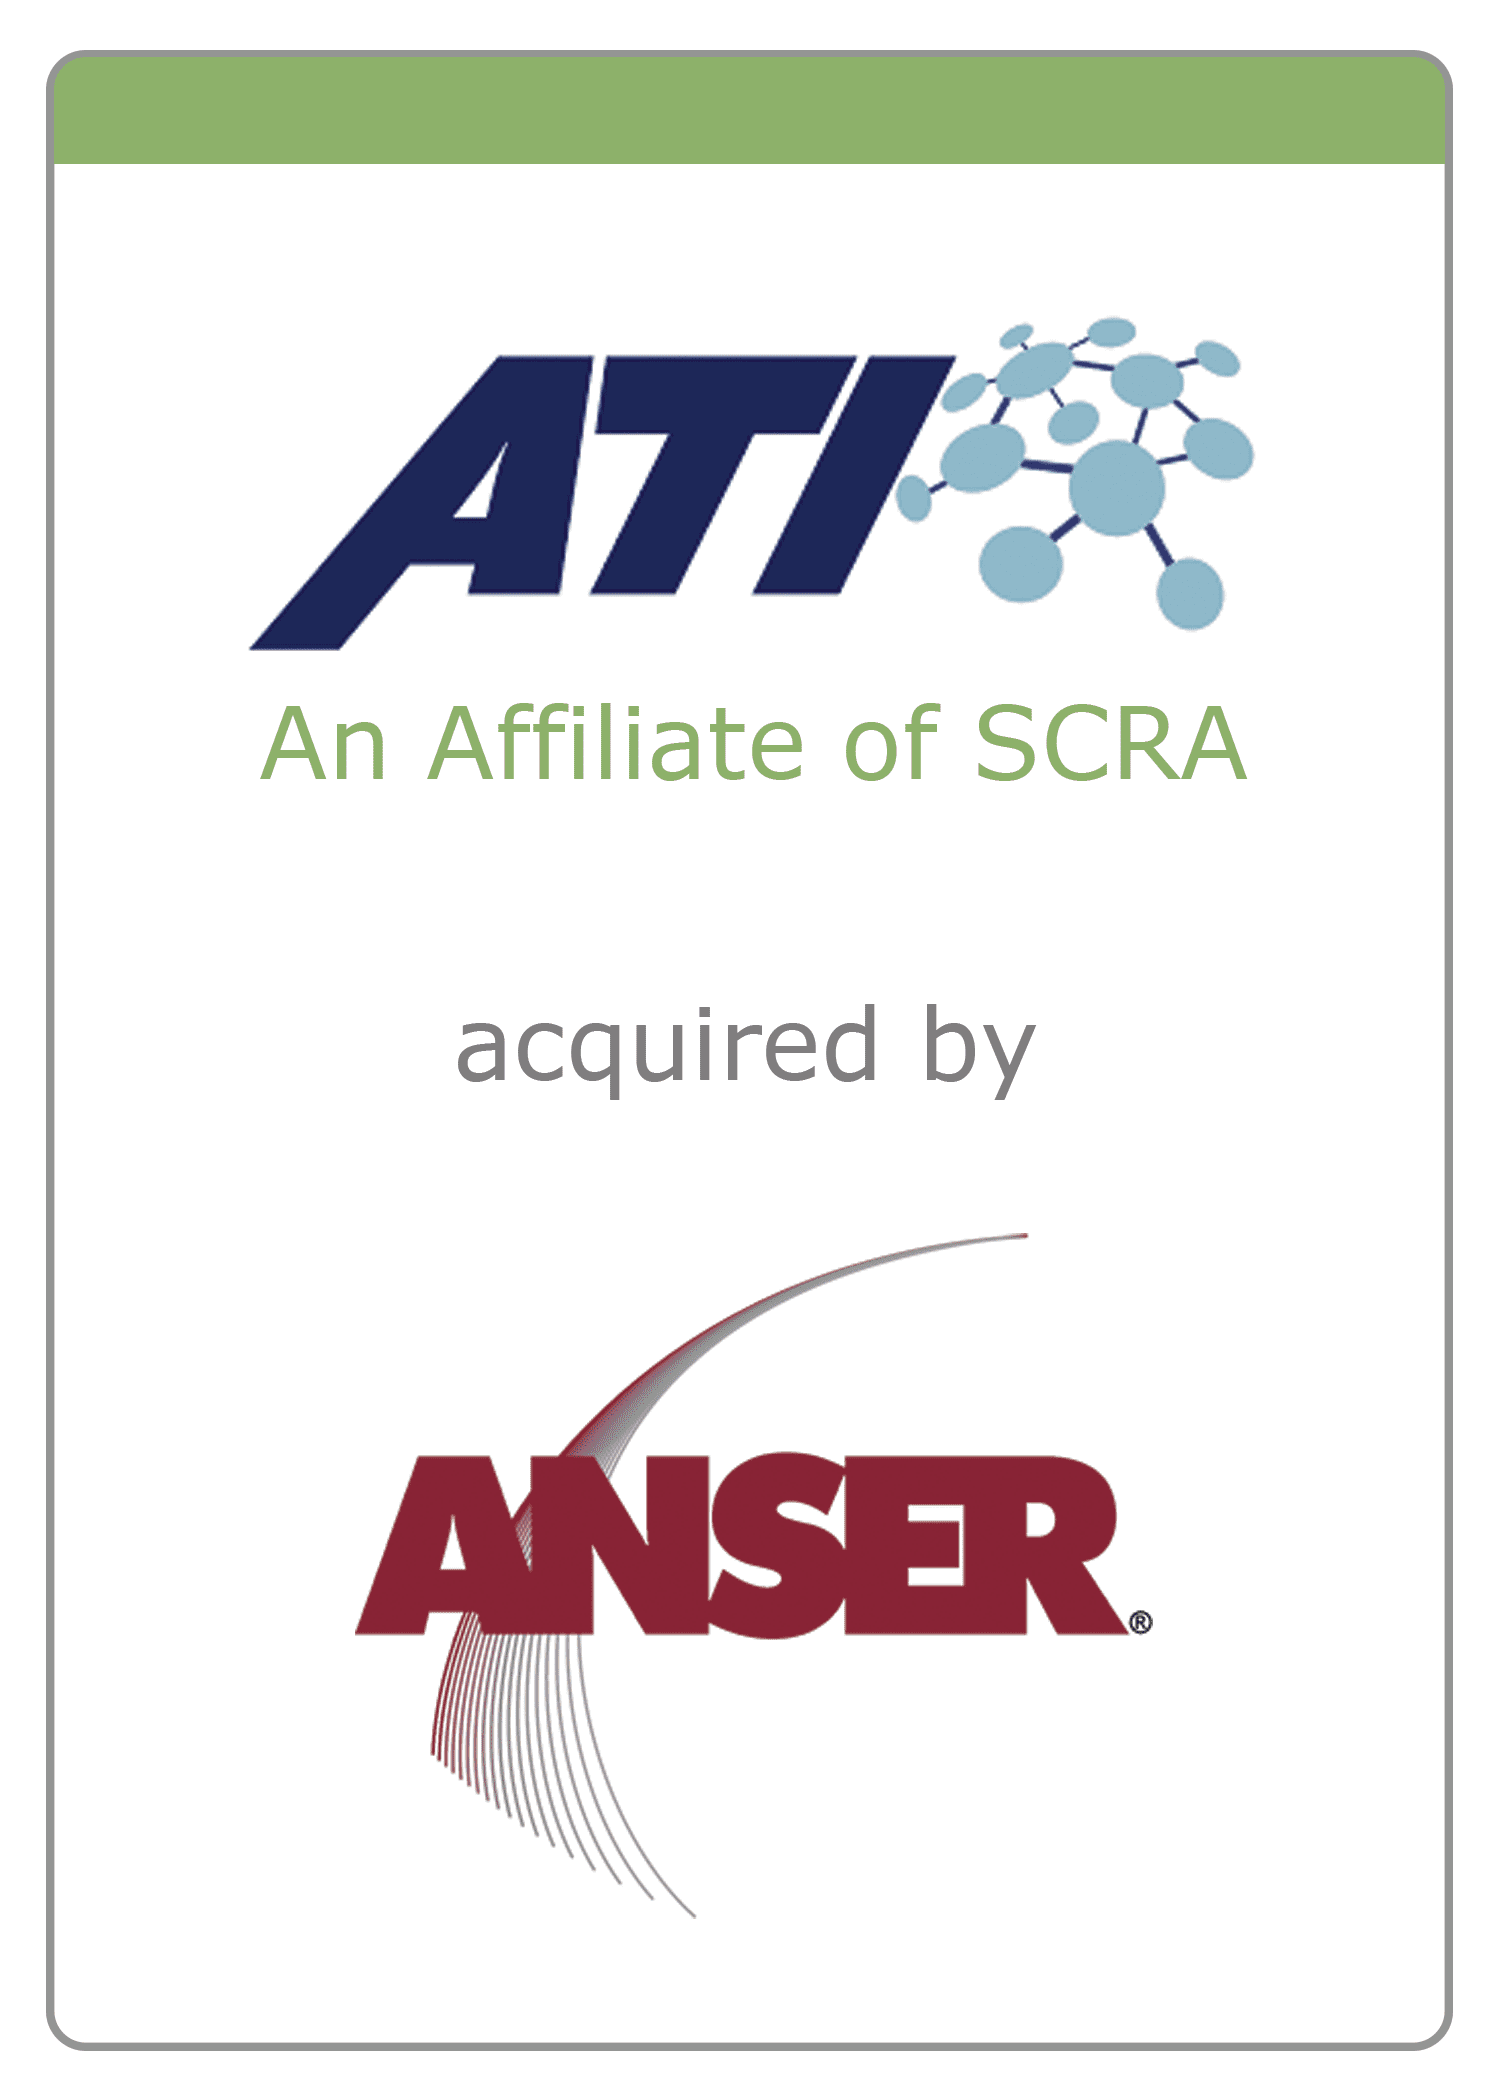 ATI sale to ANSER from SCRA